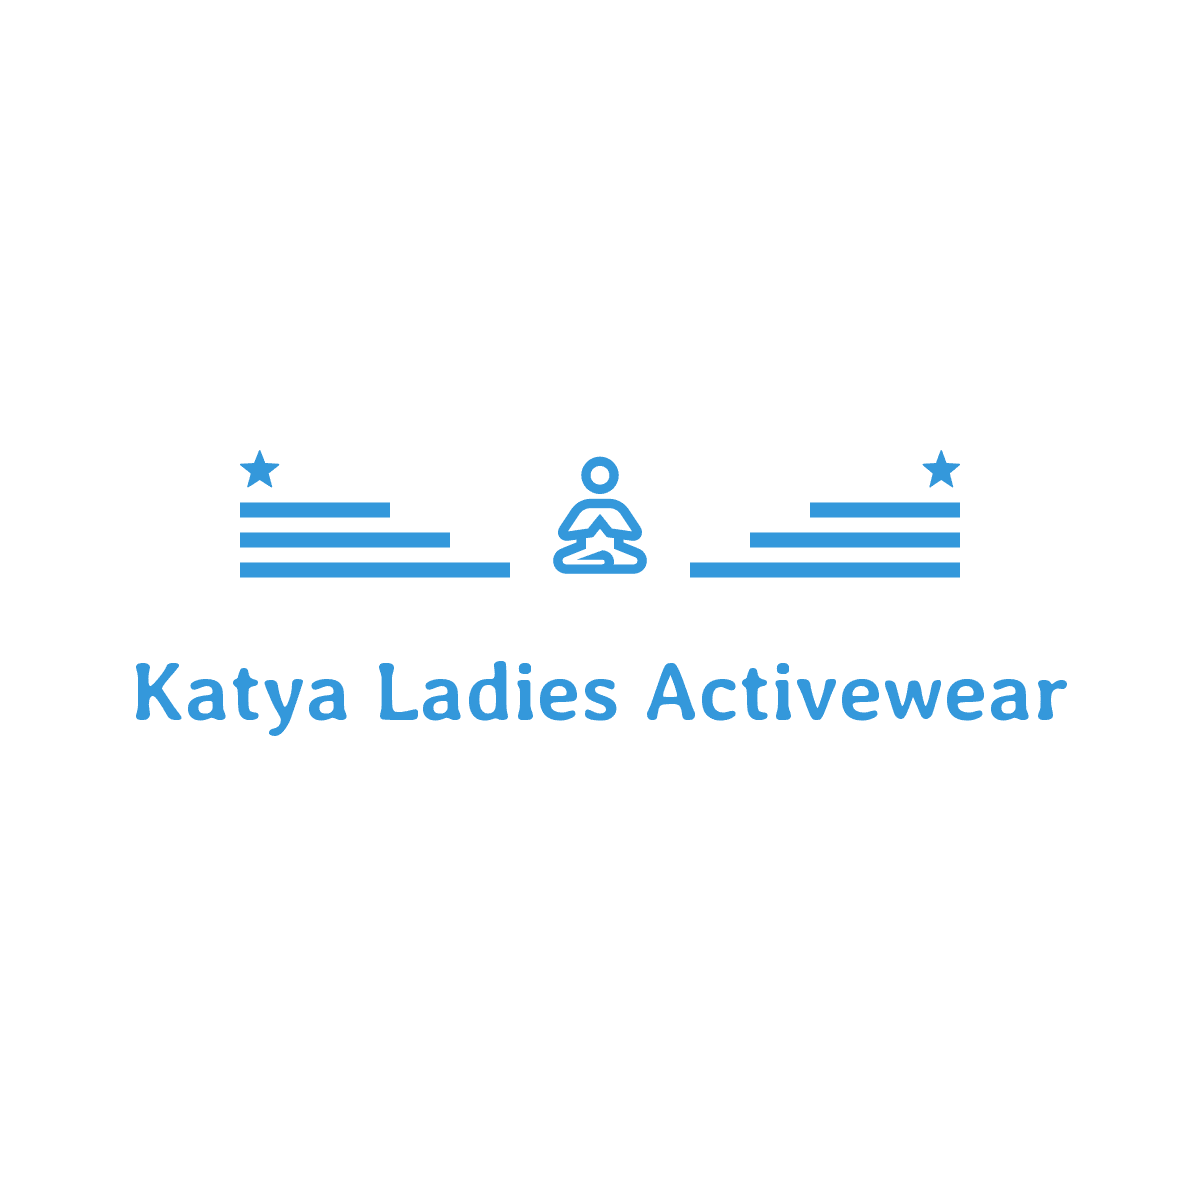 Katya Ladies Activewear